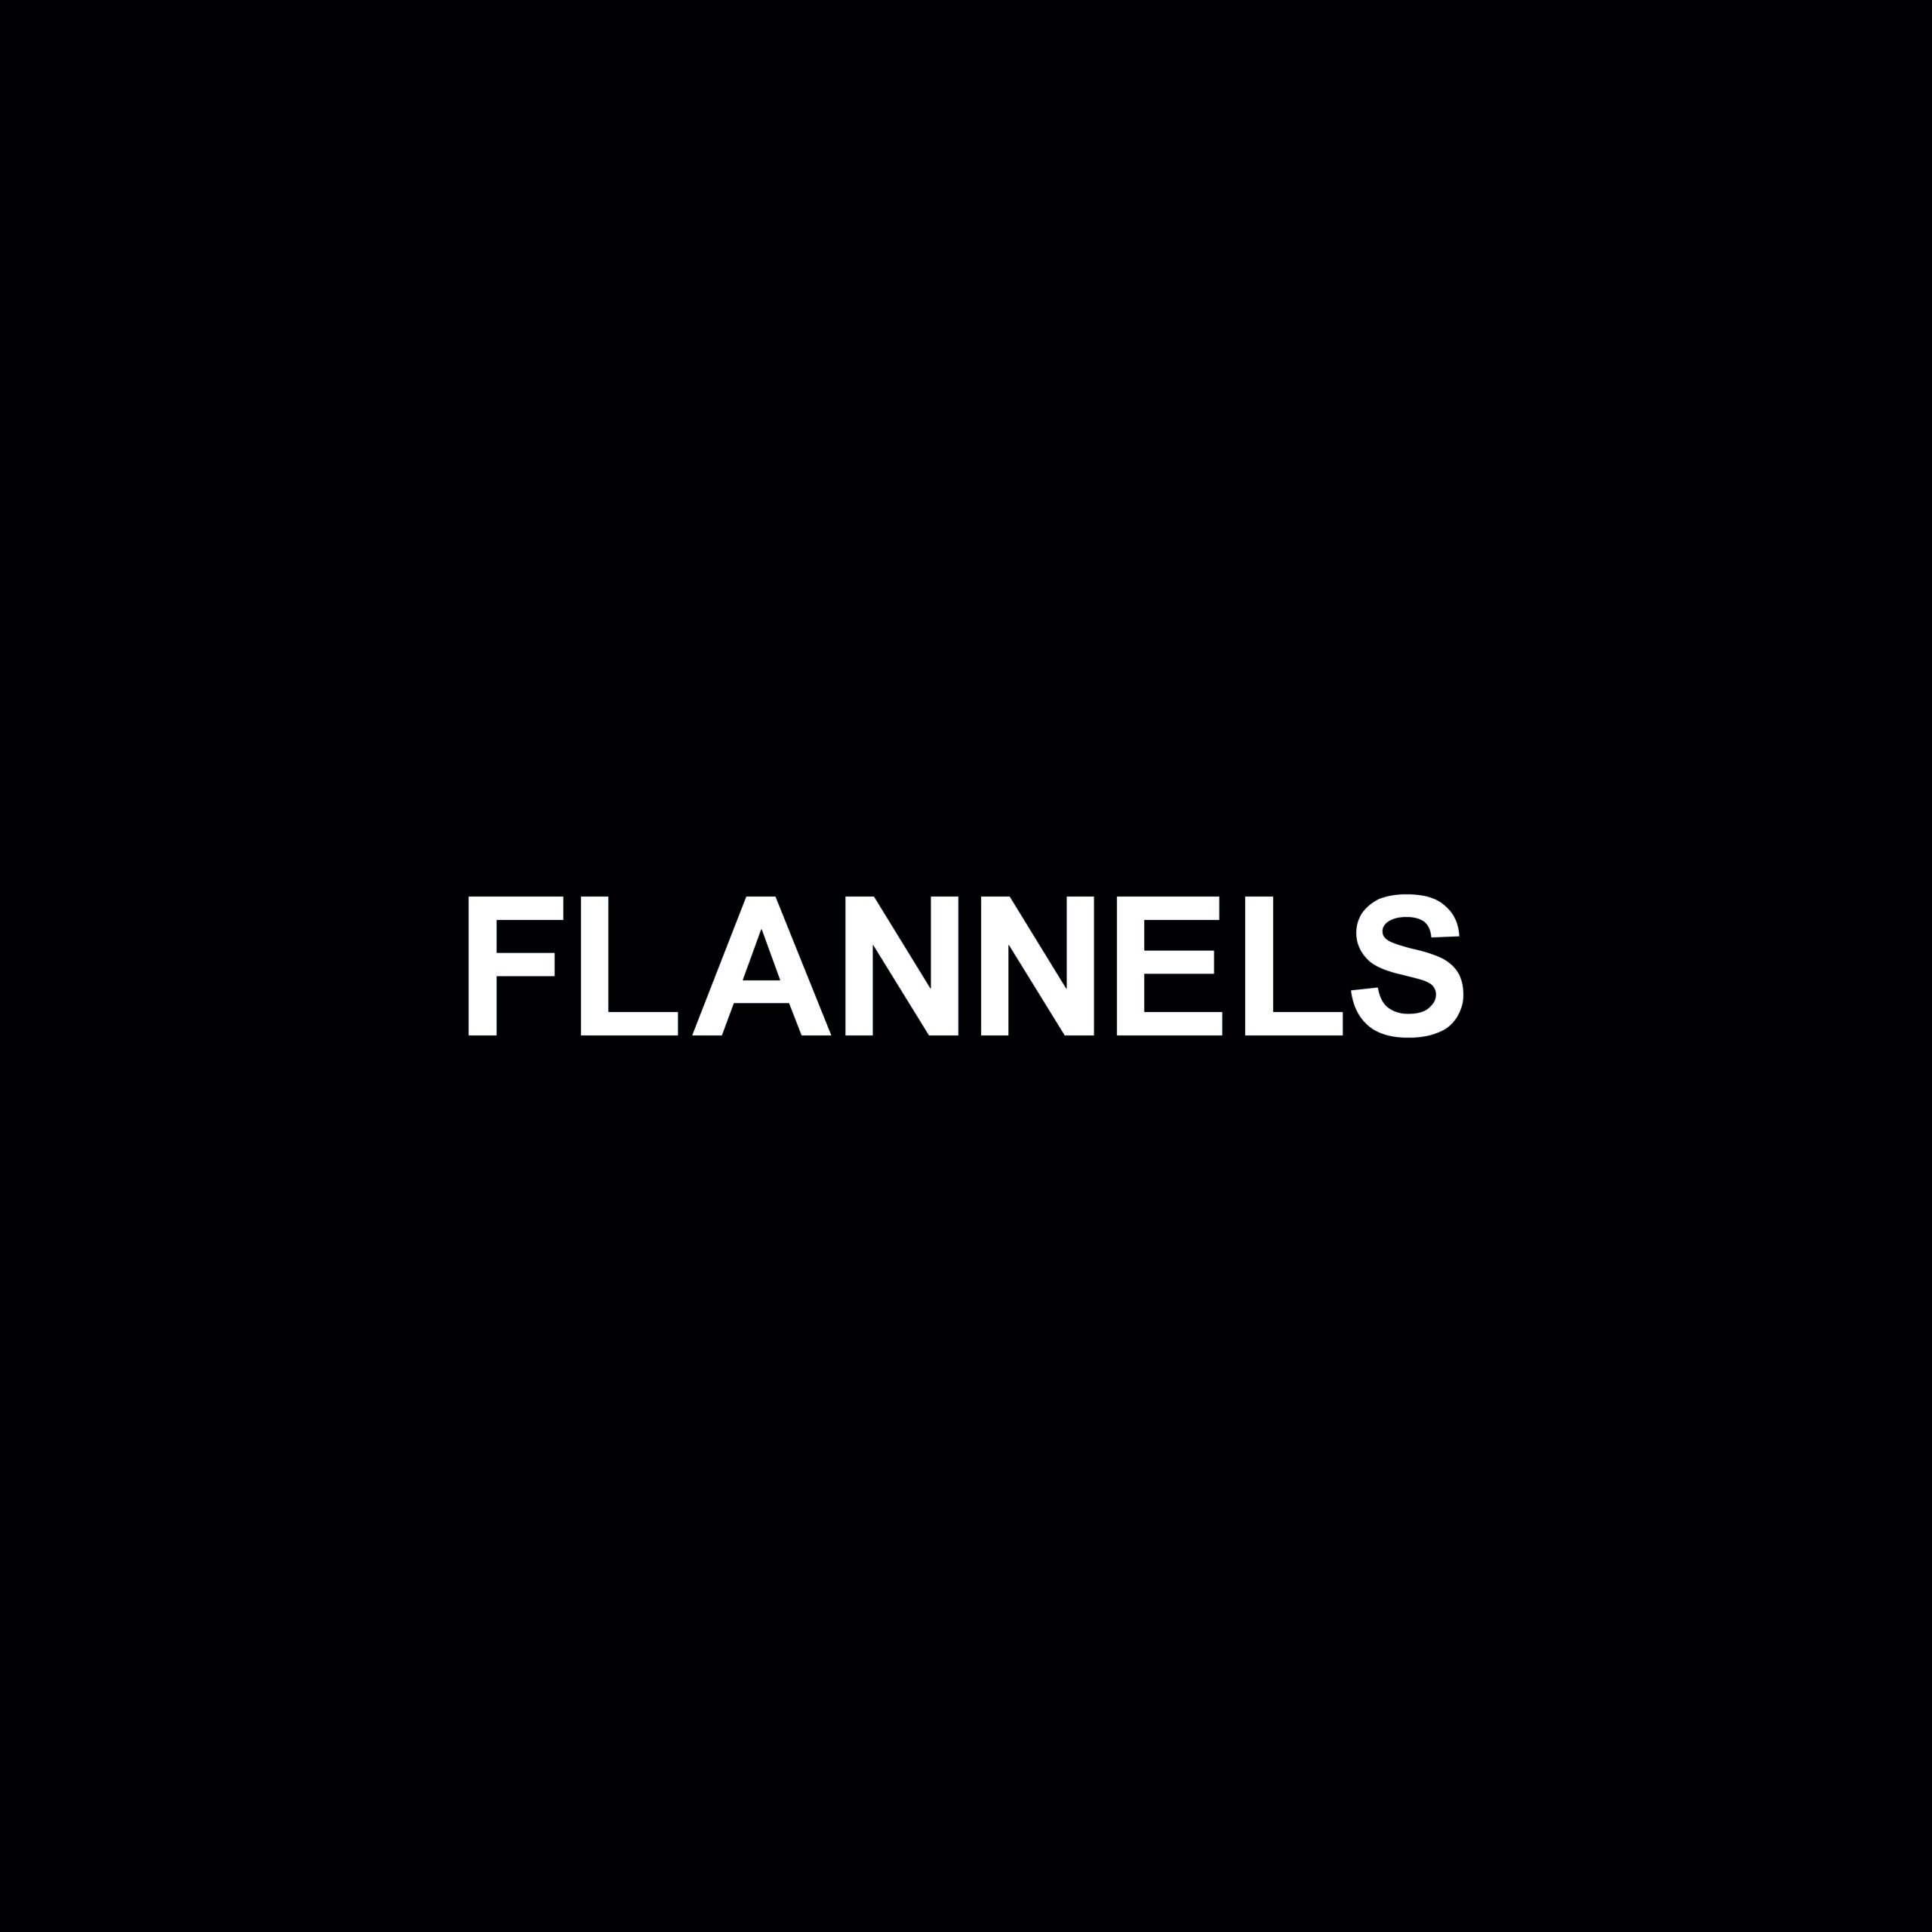 FLANNELS LOGO BLACKBG 01